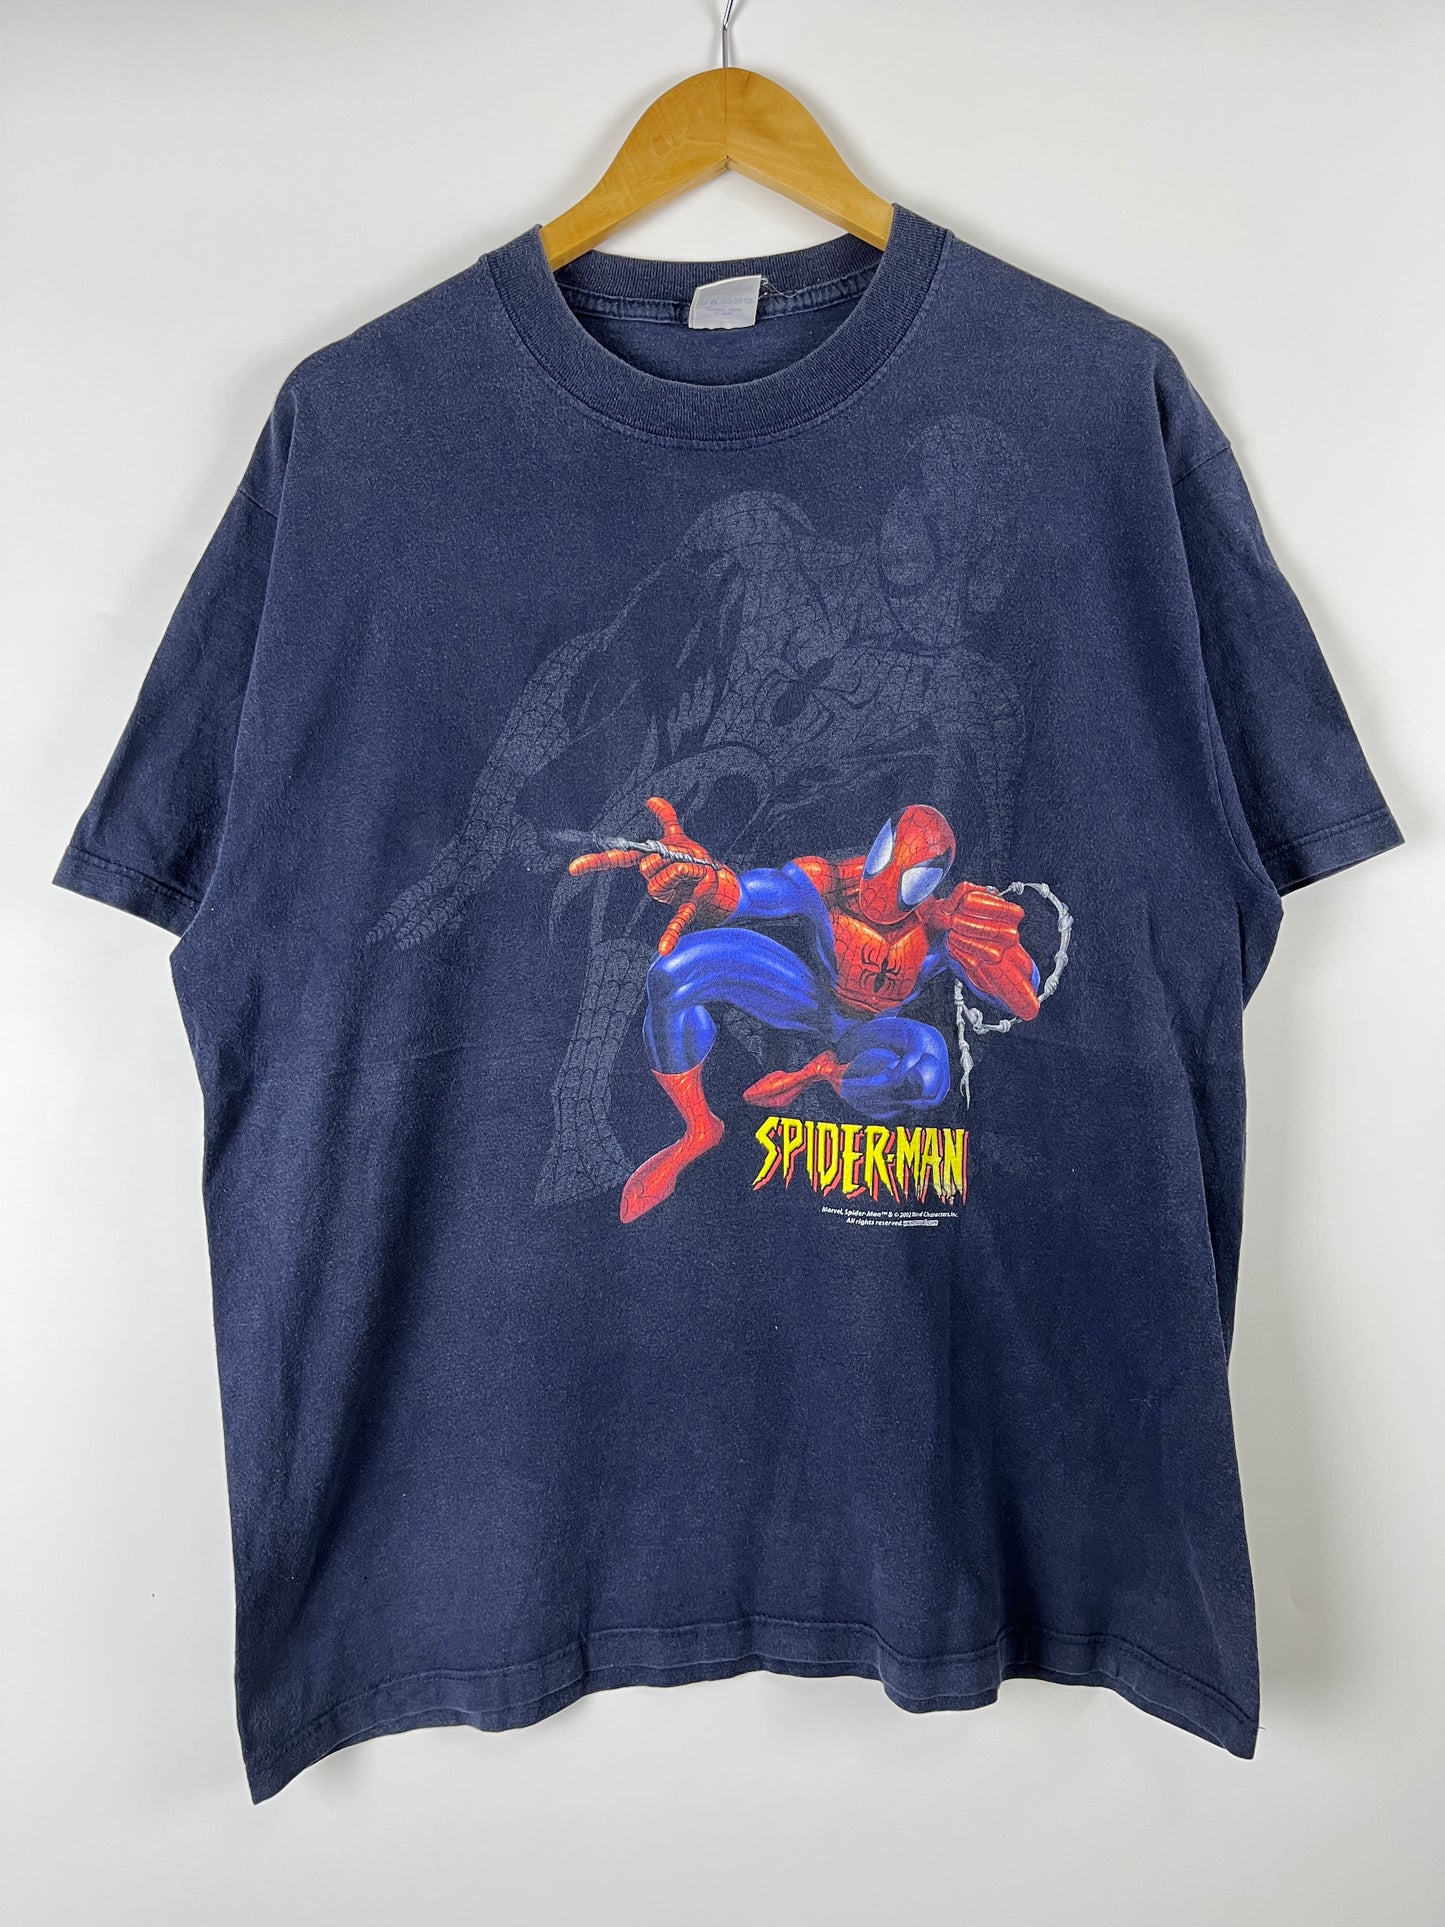 Vintage Spider Man Marvel comics character 2002